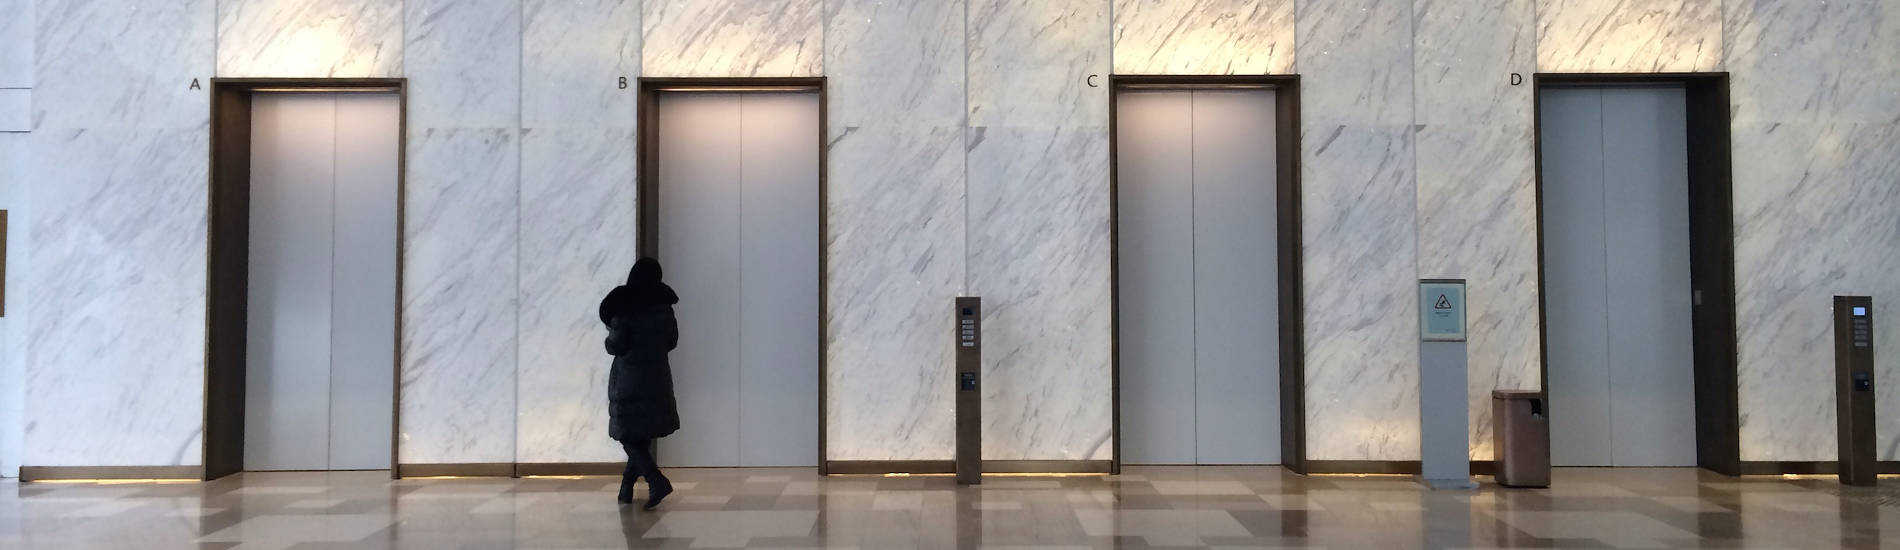 آسانسور زیبا